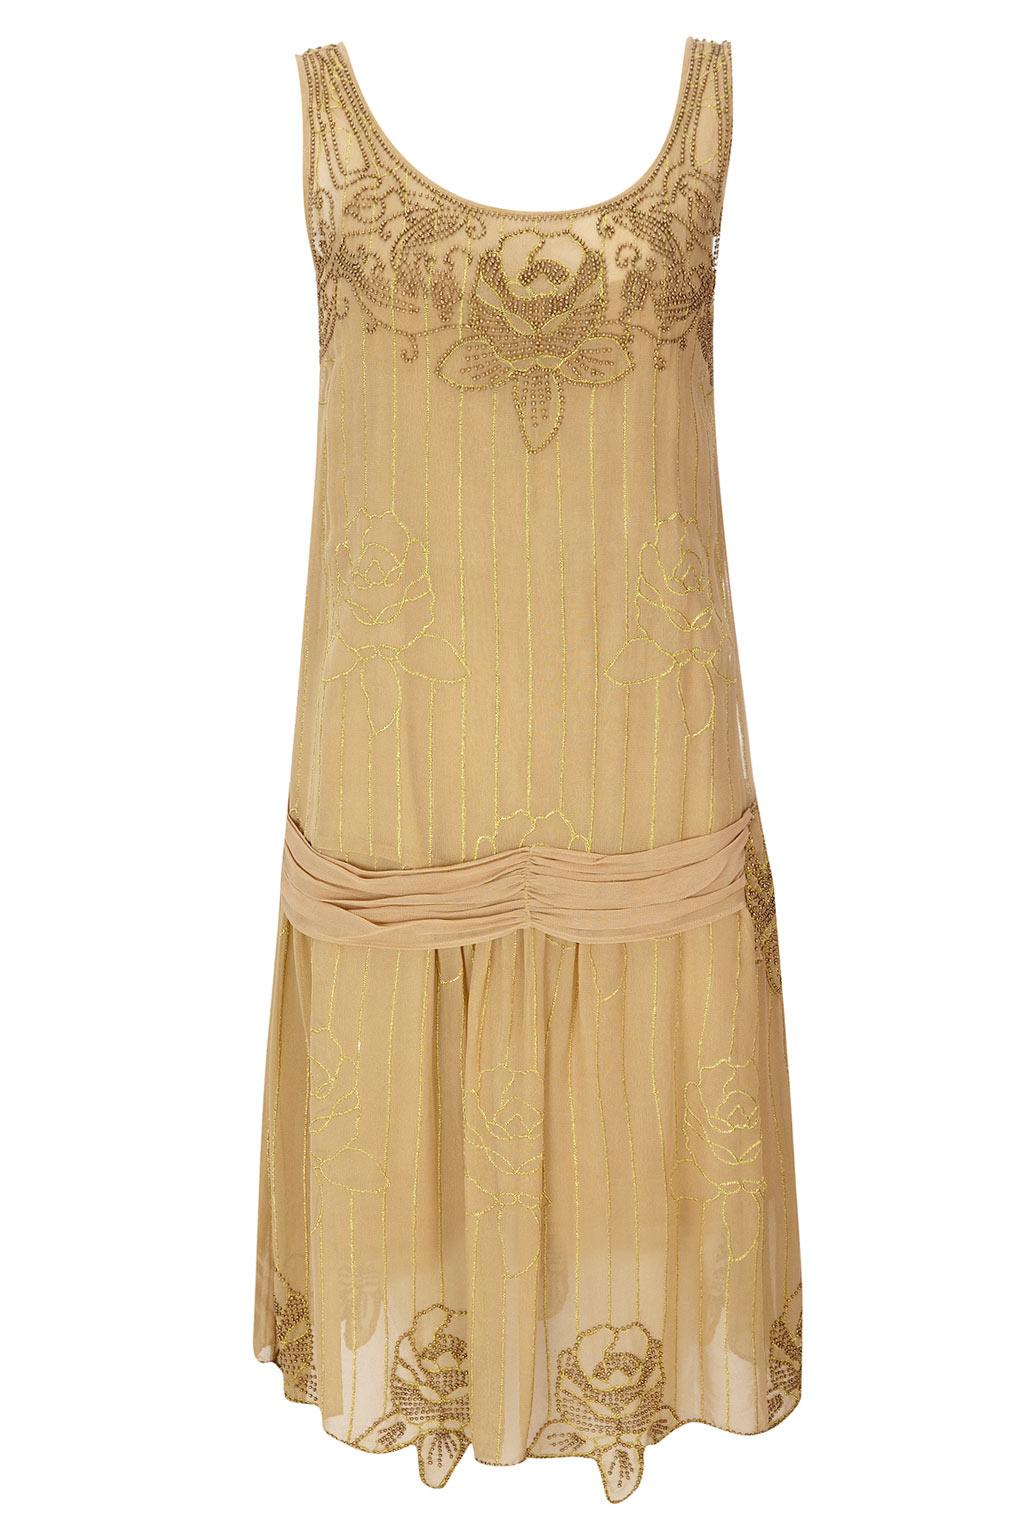 1920s dresses high street